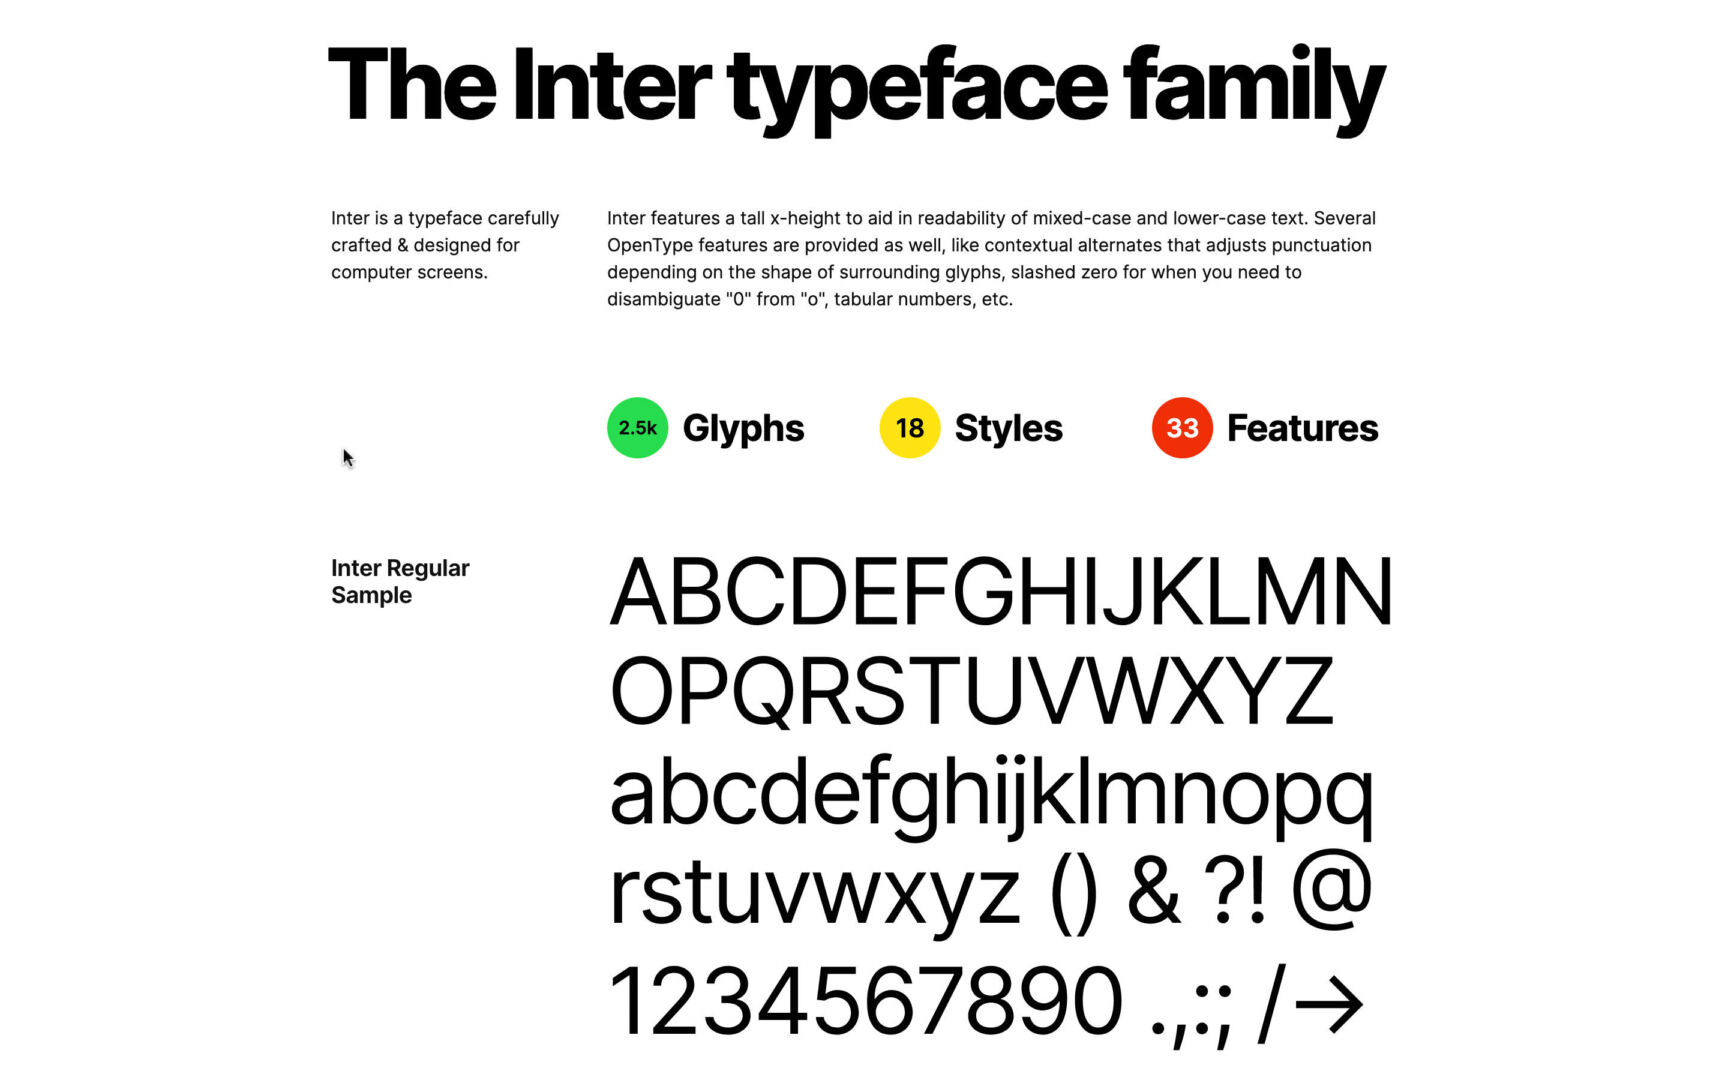 Inter typeface